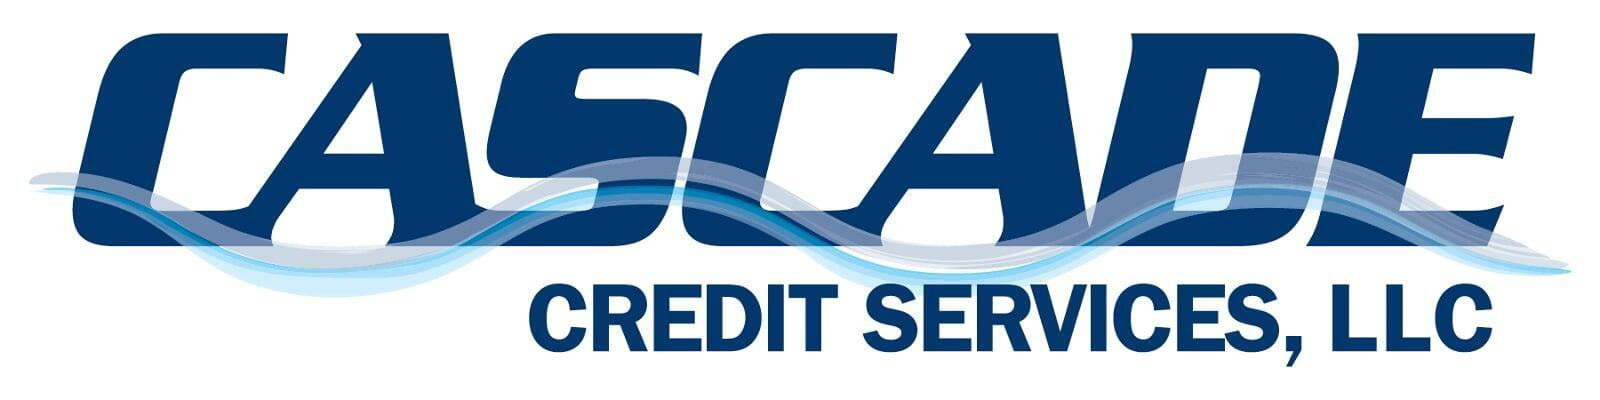 Cascade Credit Services, LLC